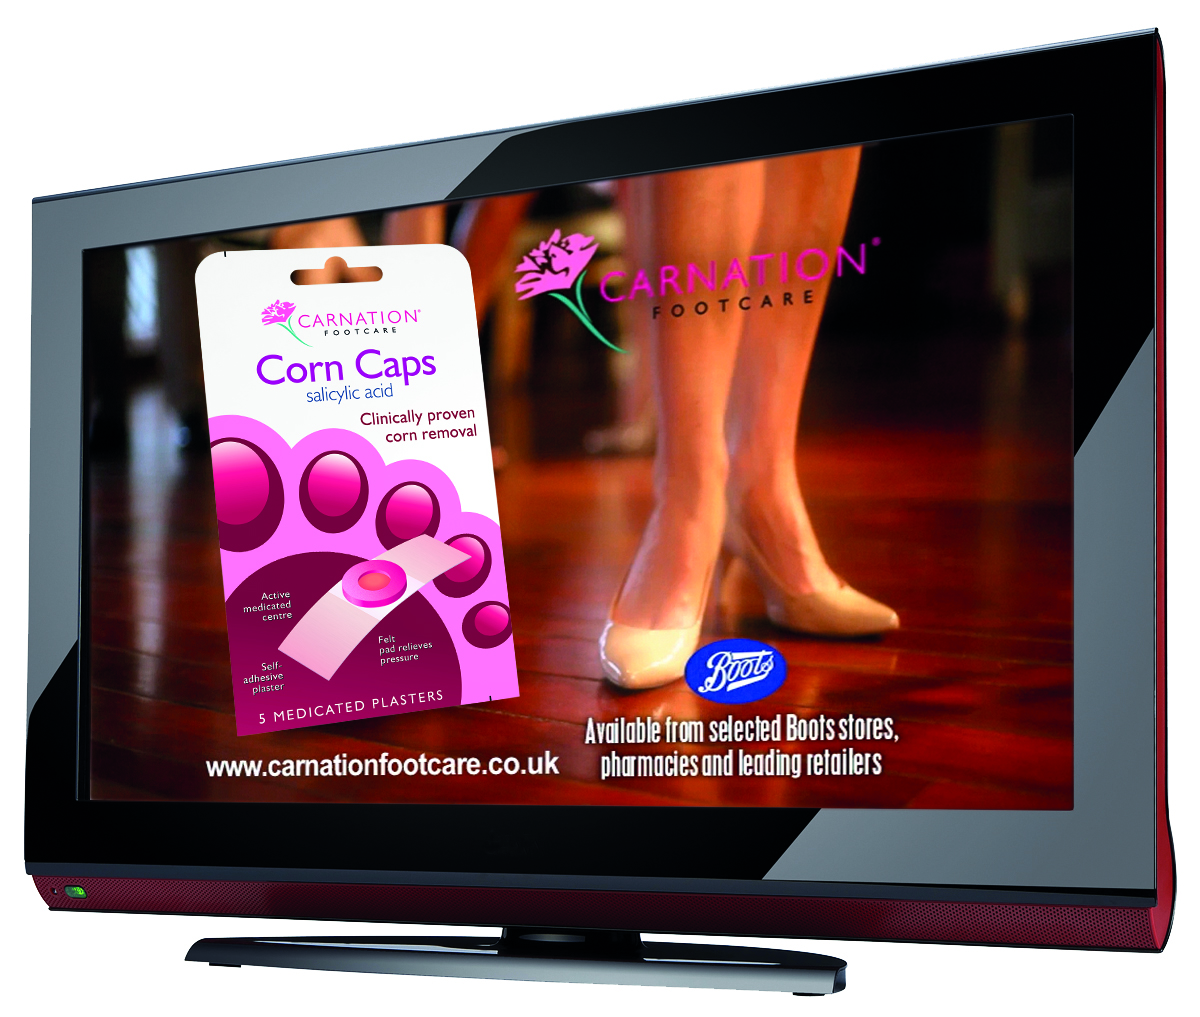 Carnation Corn Cap Tv Advert by Zig Zag Advertising, A Midlands Creative Agency